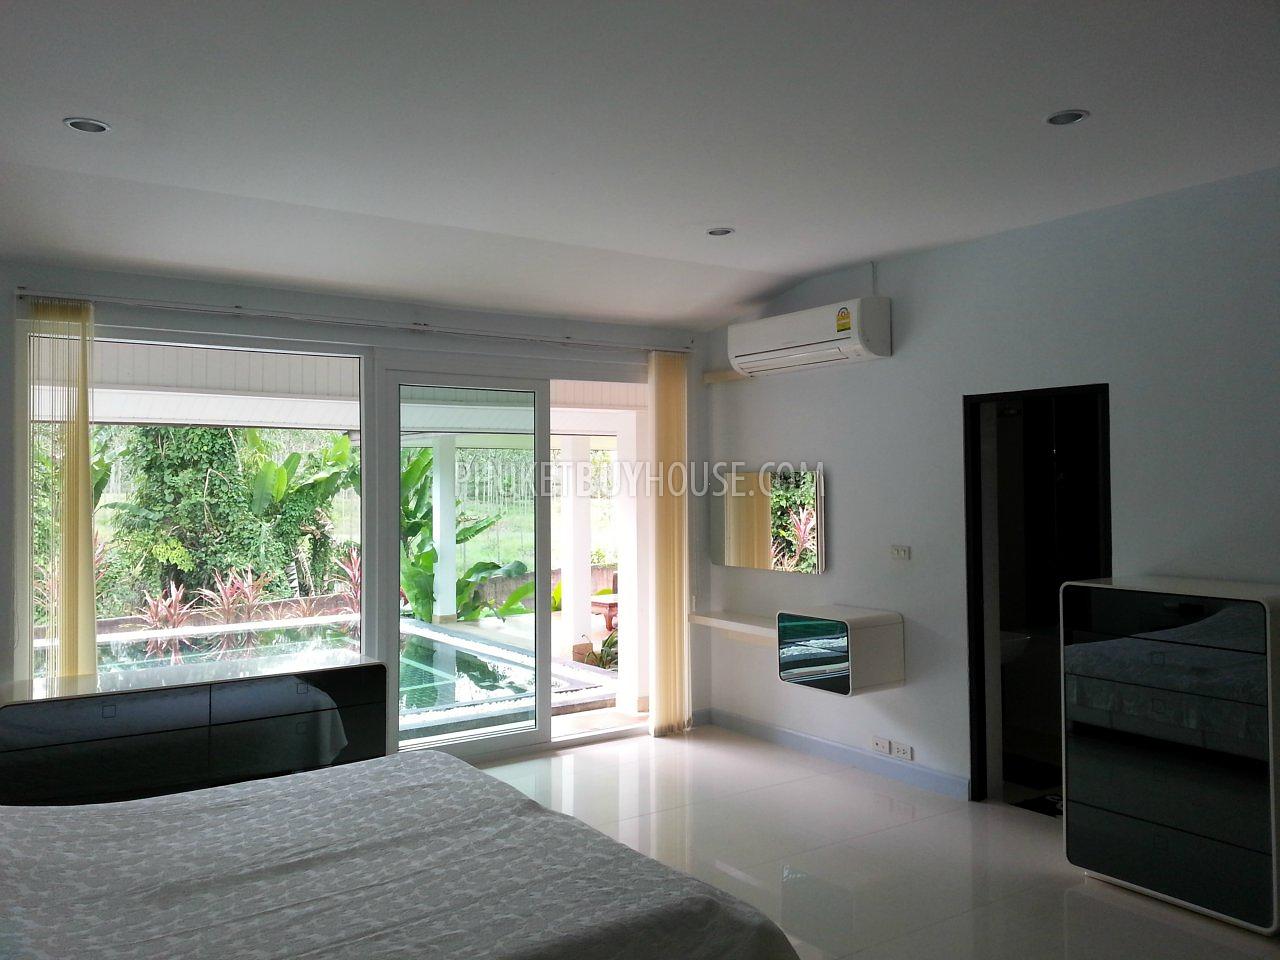 EAS3910: Hot! 4-bedroom modern pool villa on a 1 rai land plot near PIADS (UWC). Urgent sale!. Photo #39